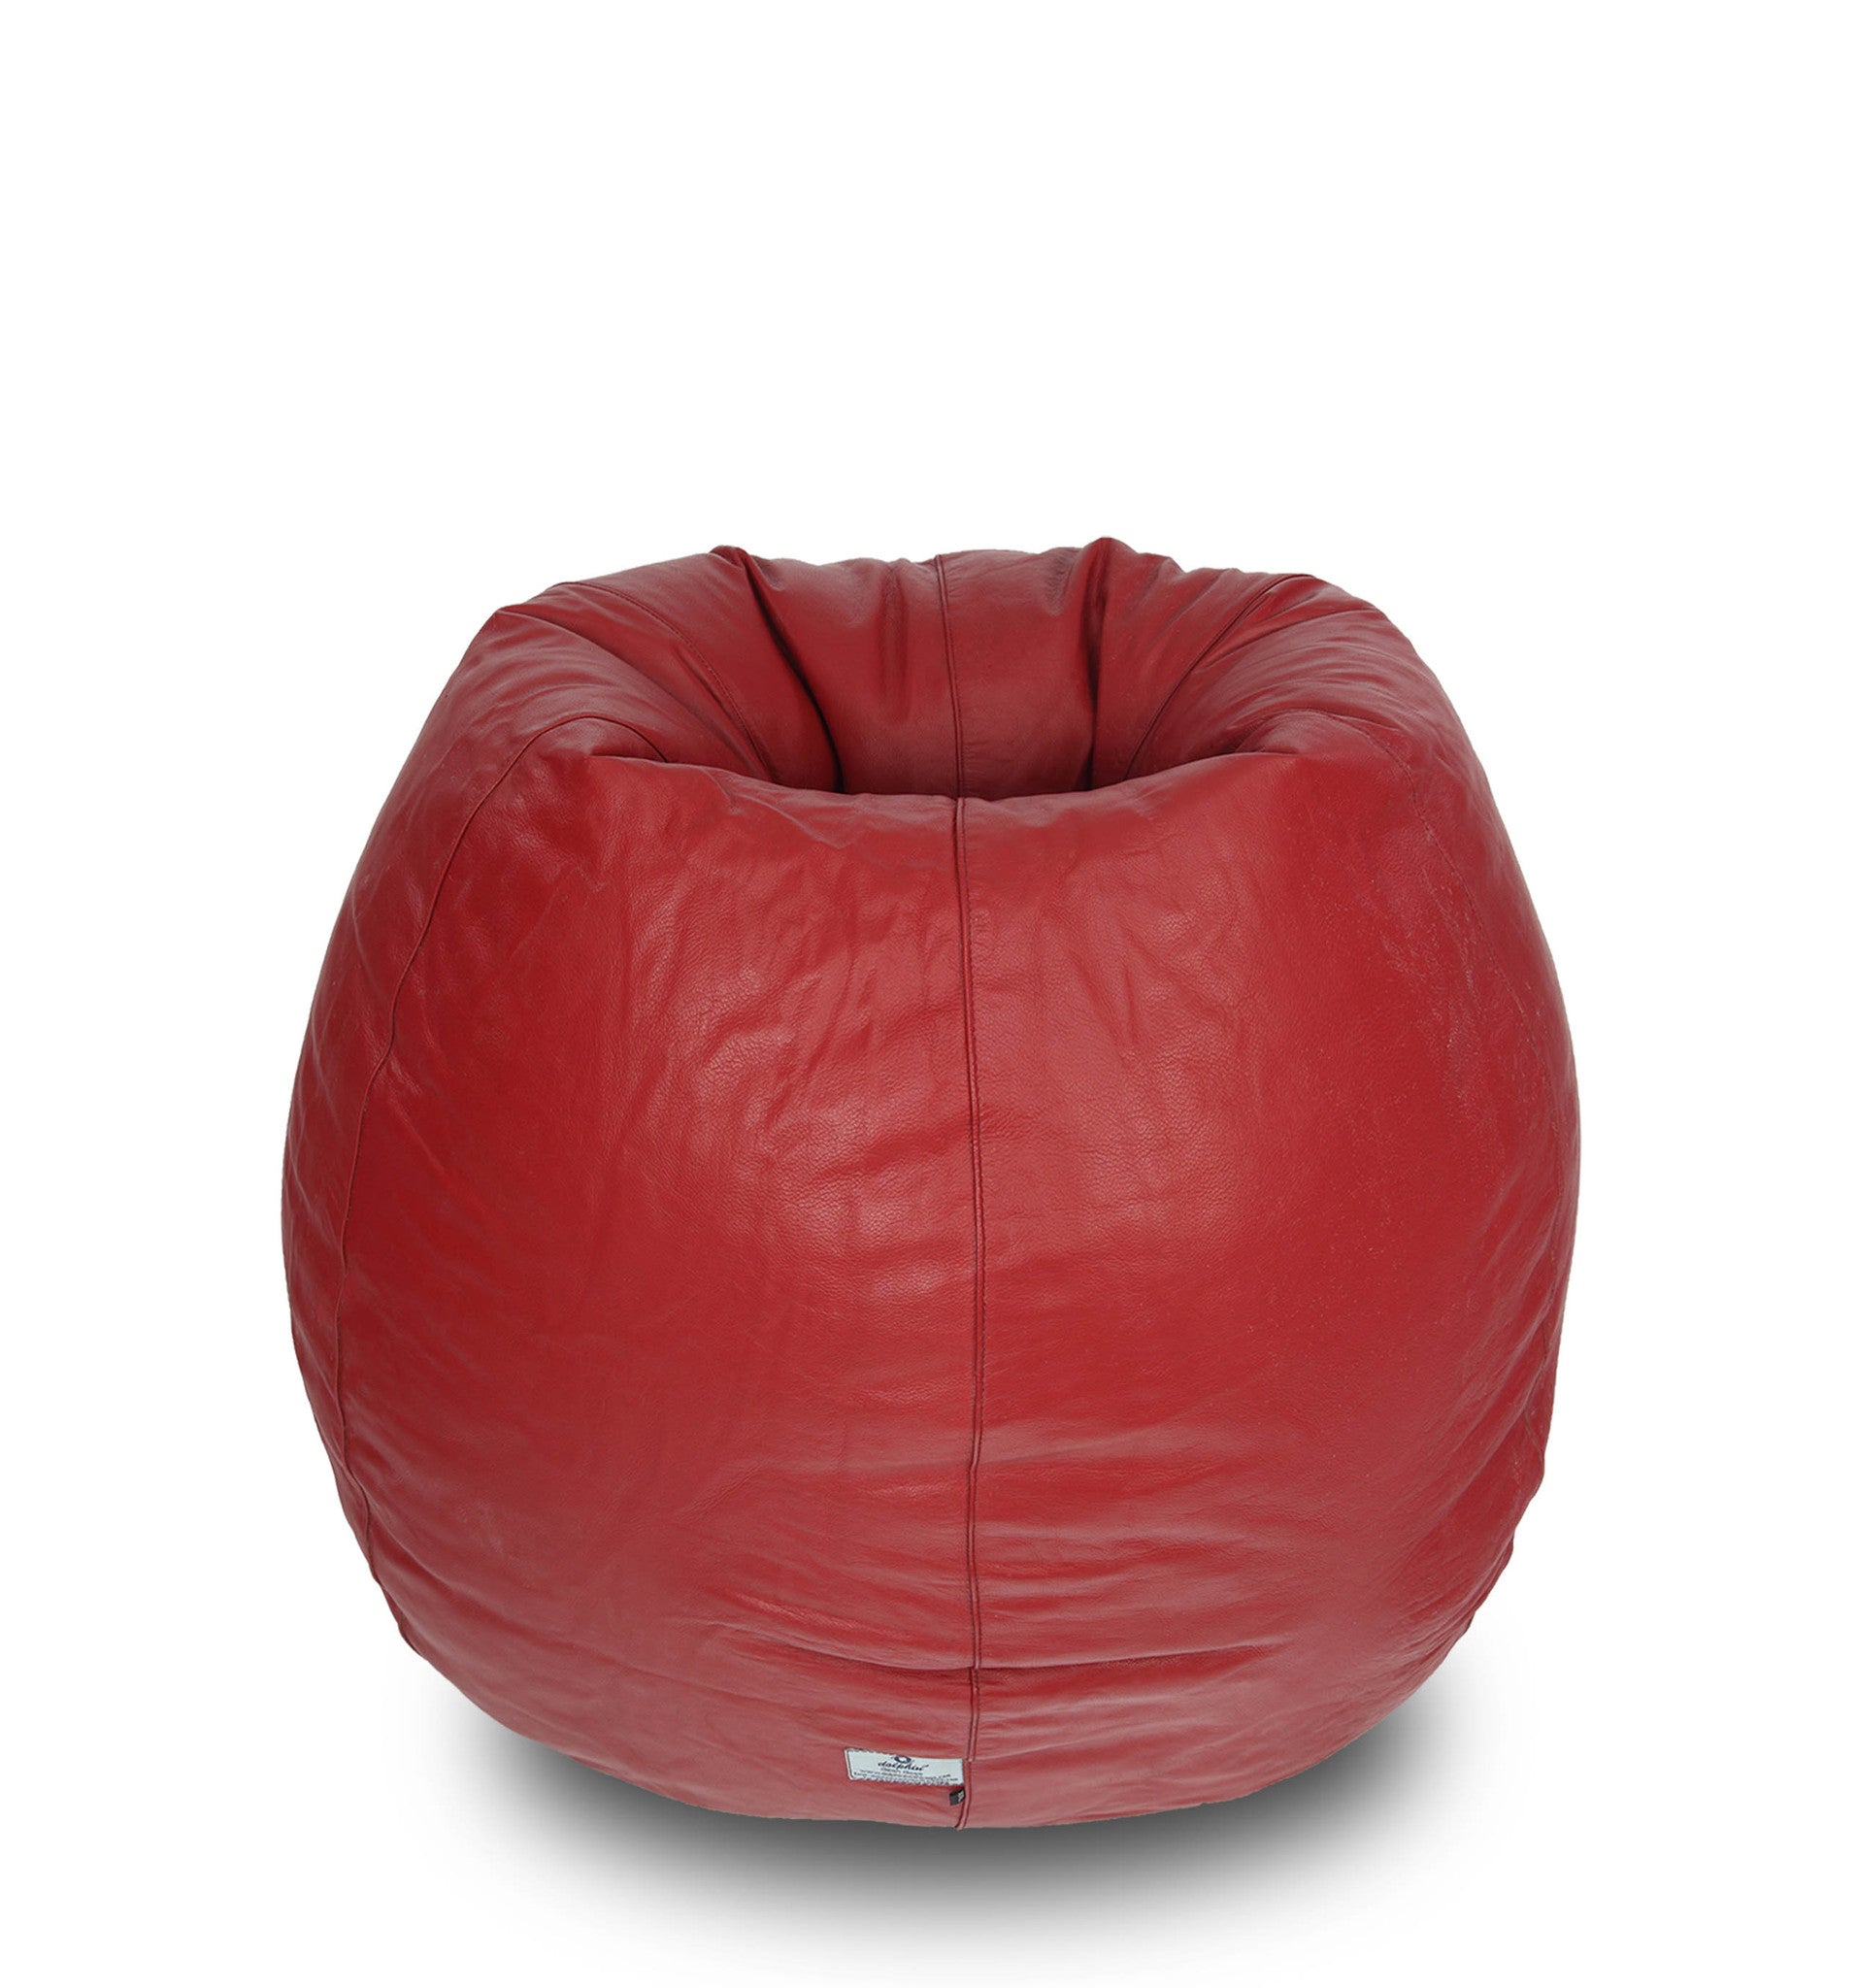 OTAUTAU Top Faux Leather Bean Bag Sofa Set with Filling Beanbag Chair  Ottoman Pouf Stool Corner Seat Footrest Furniture DD6XB1C